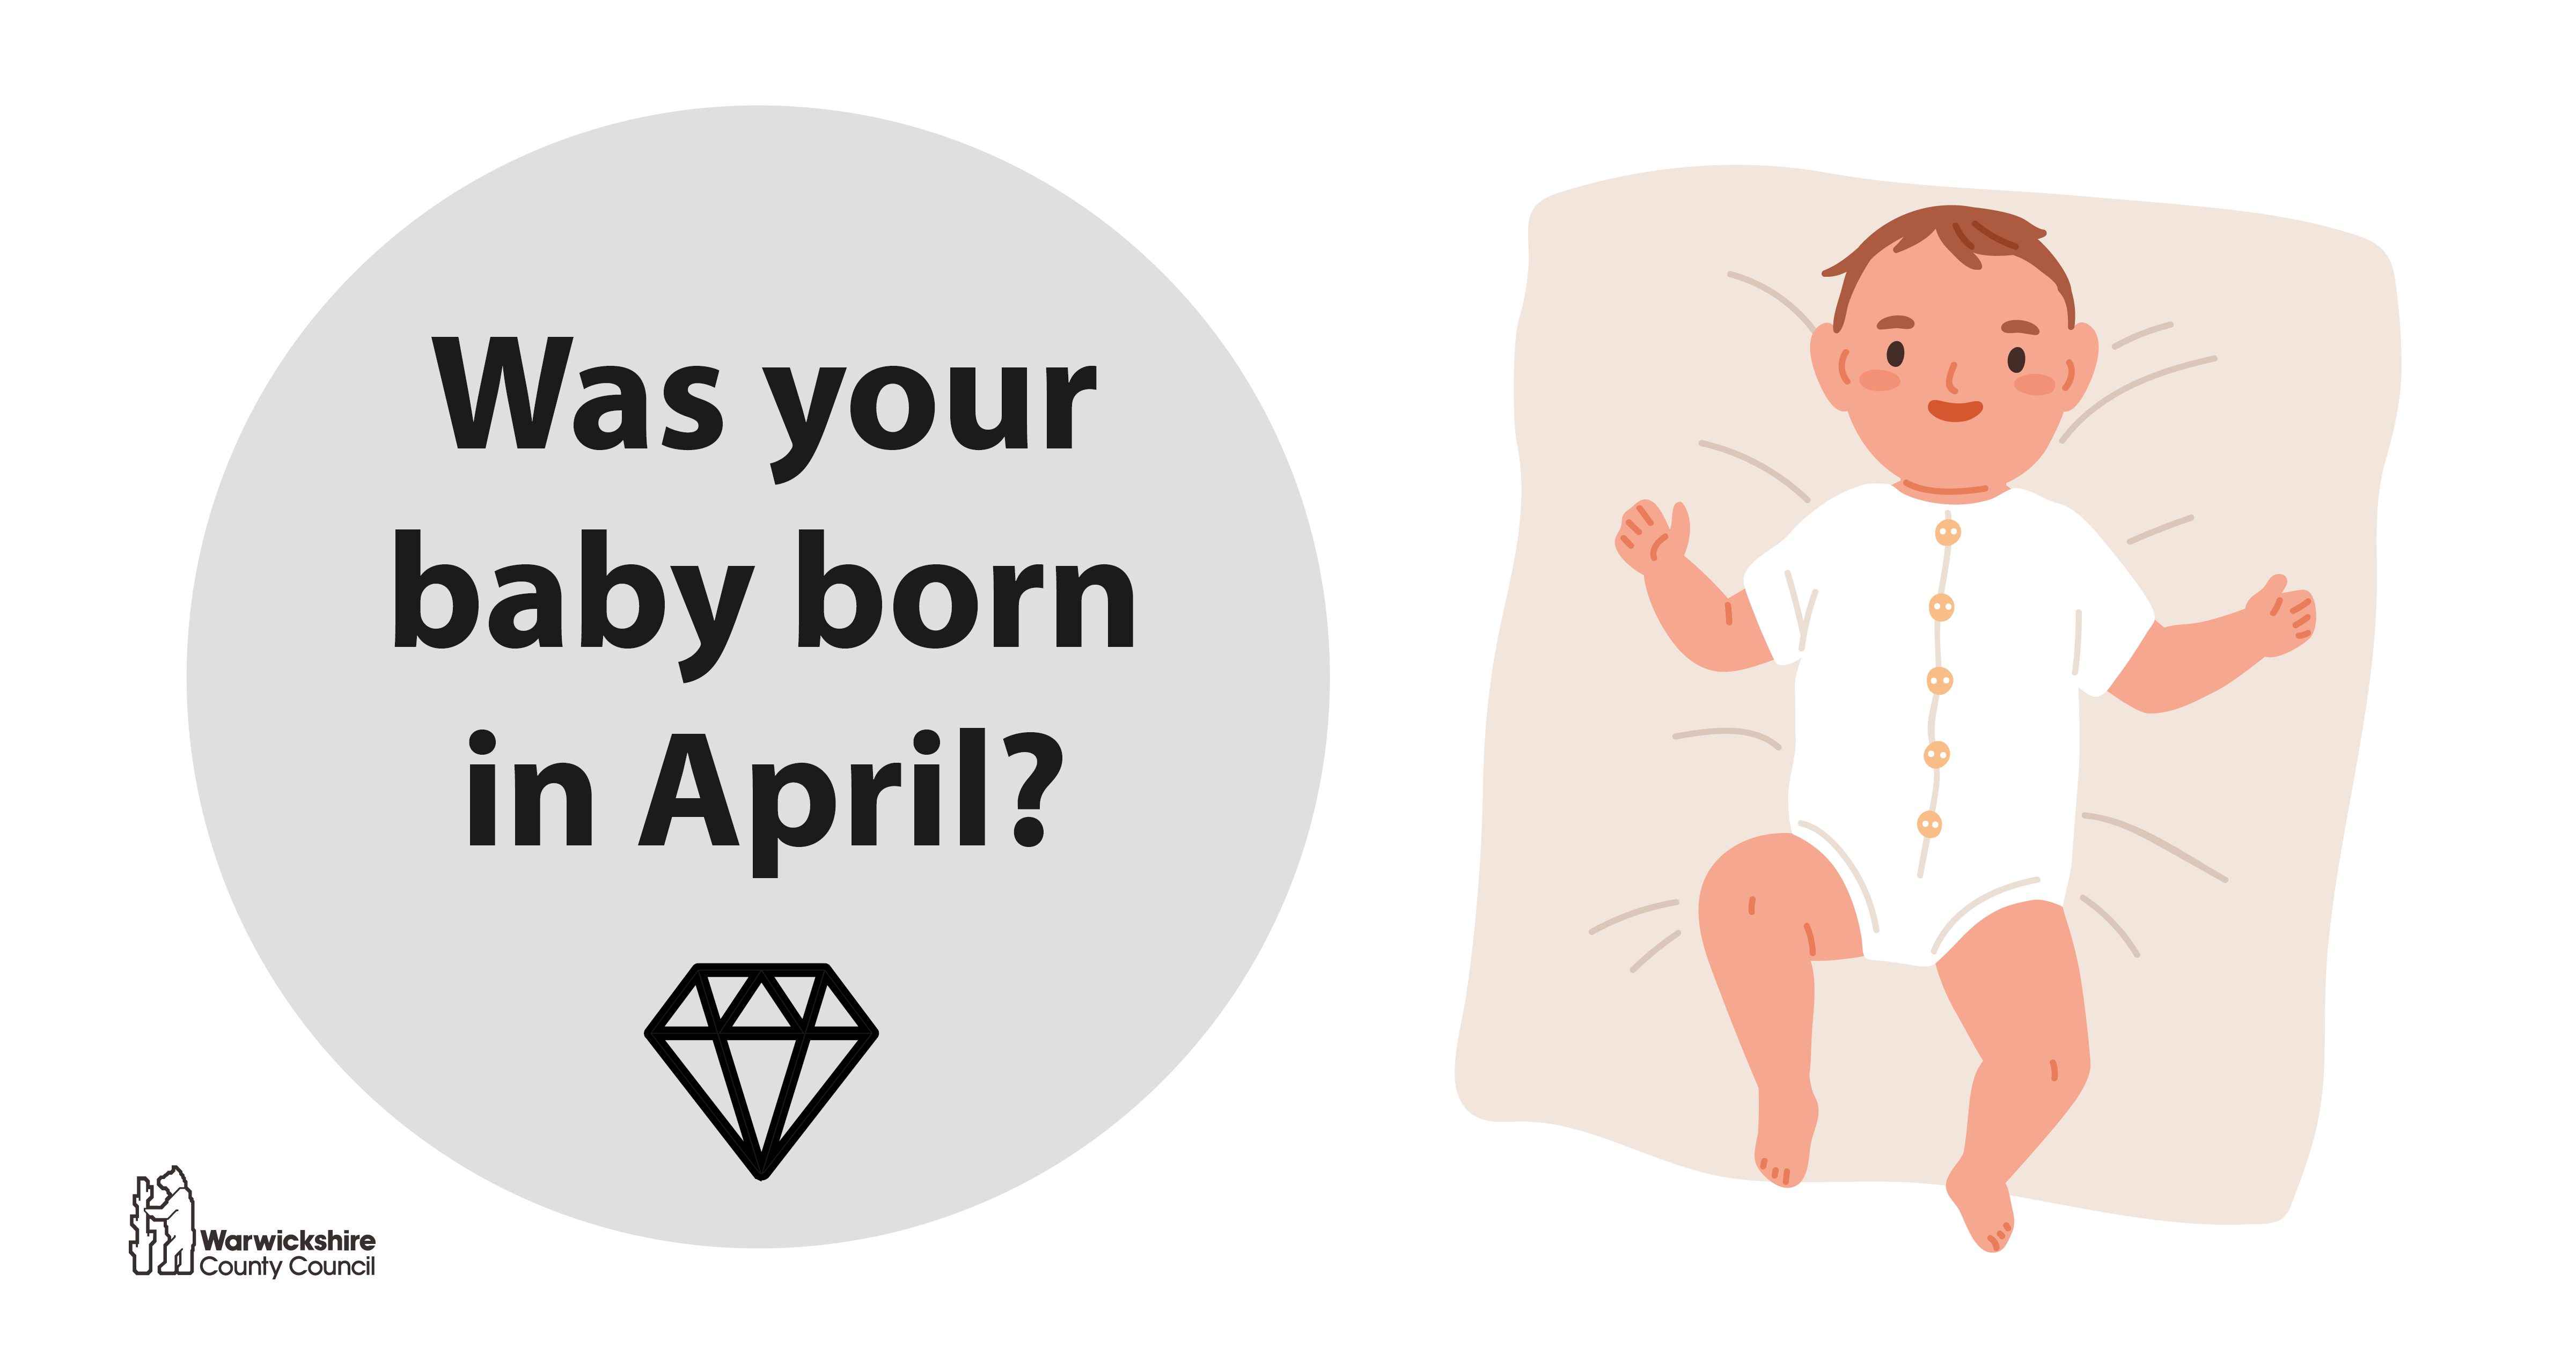 Babies born in April